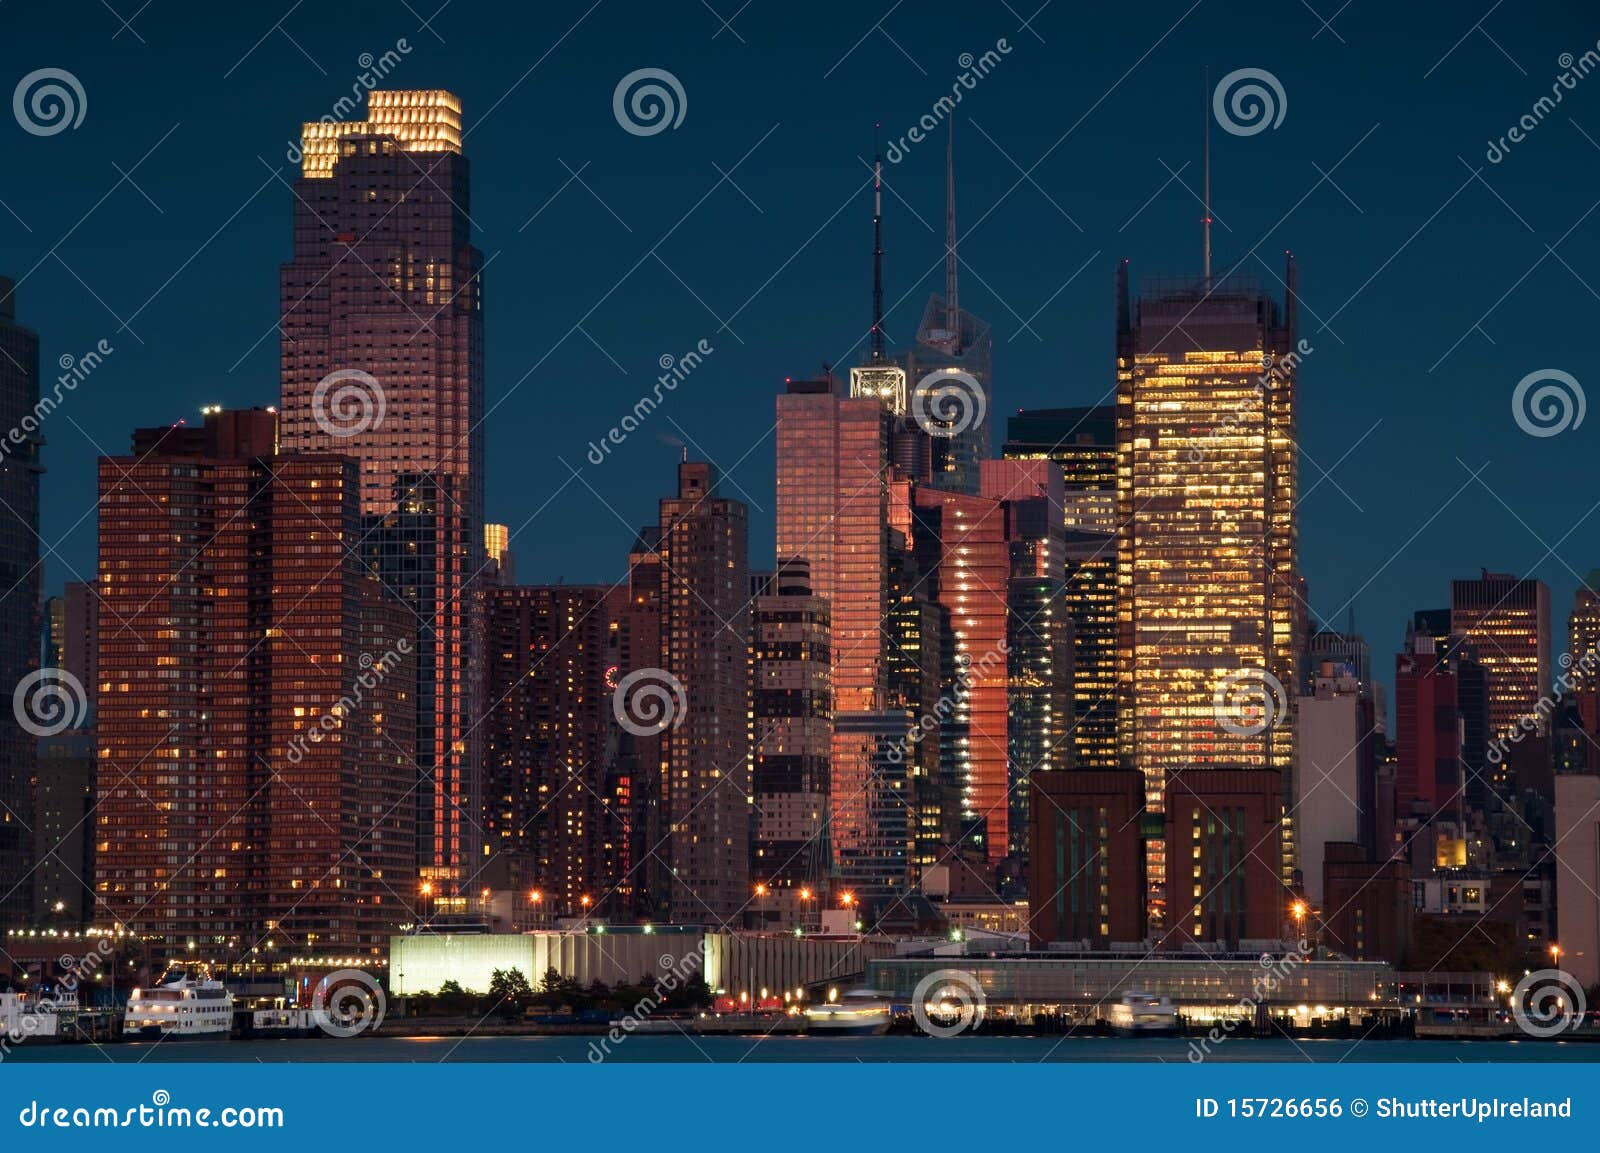 Royalty Free Stock Image: Scenic new york city skyline over hudson ...